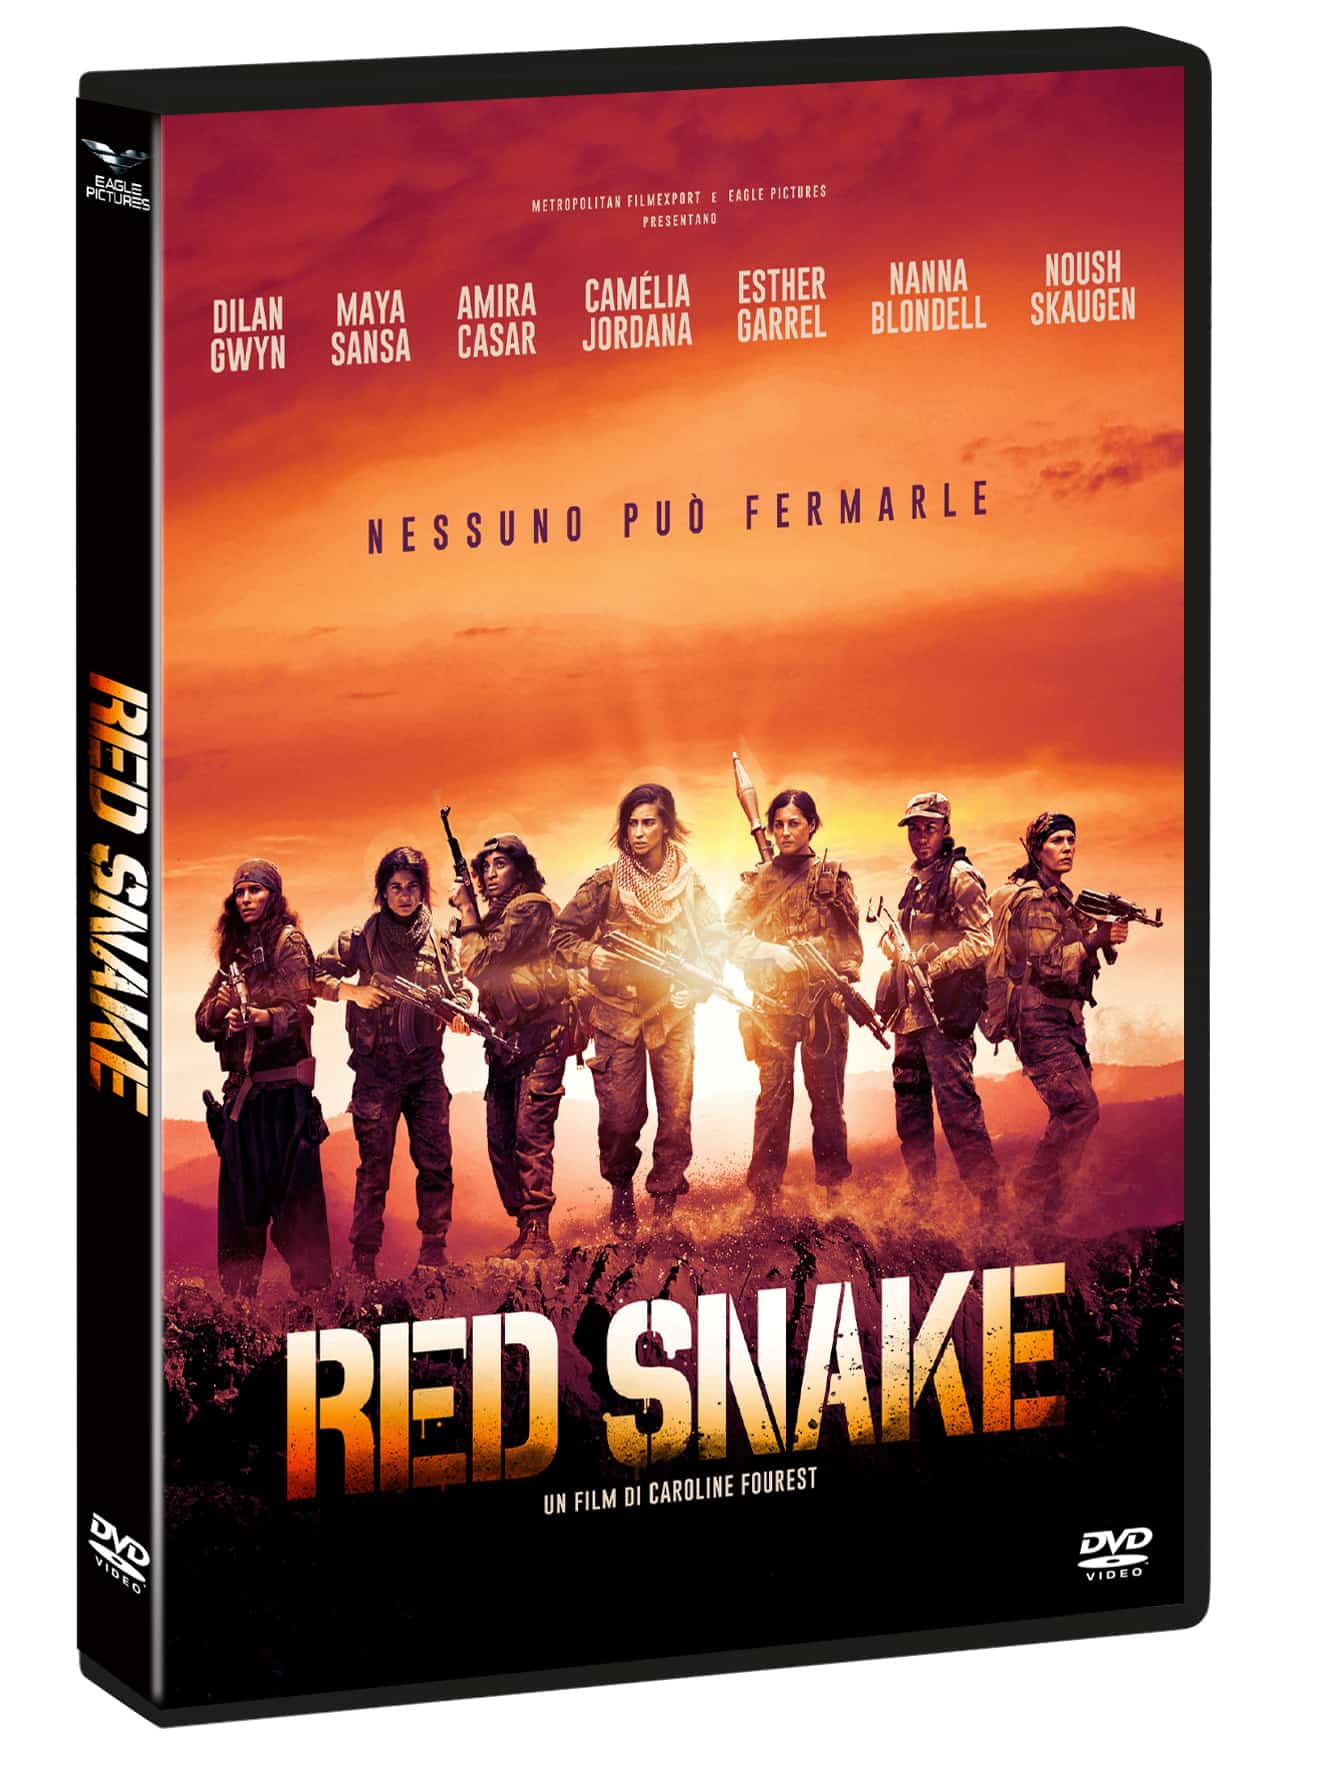 Red Snake DVD